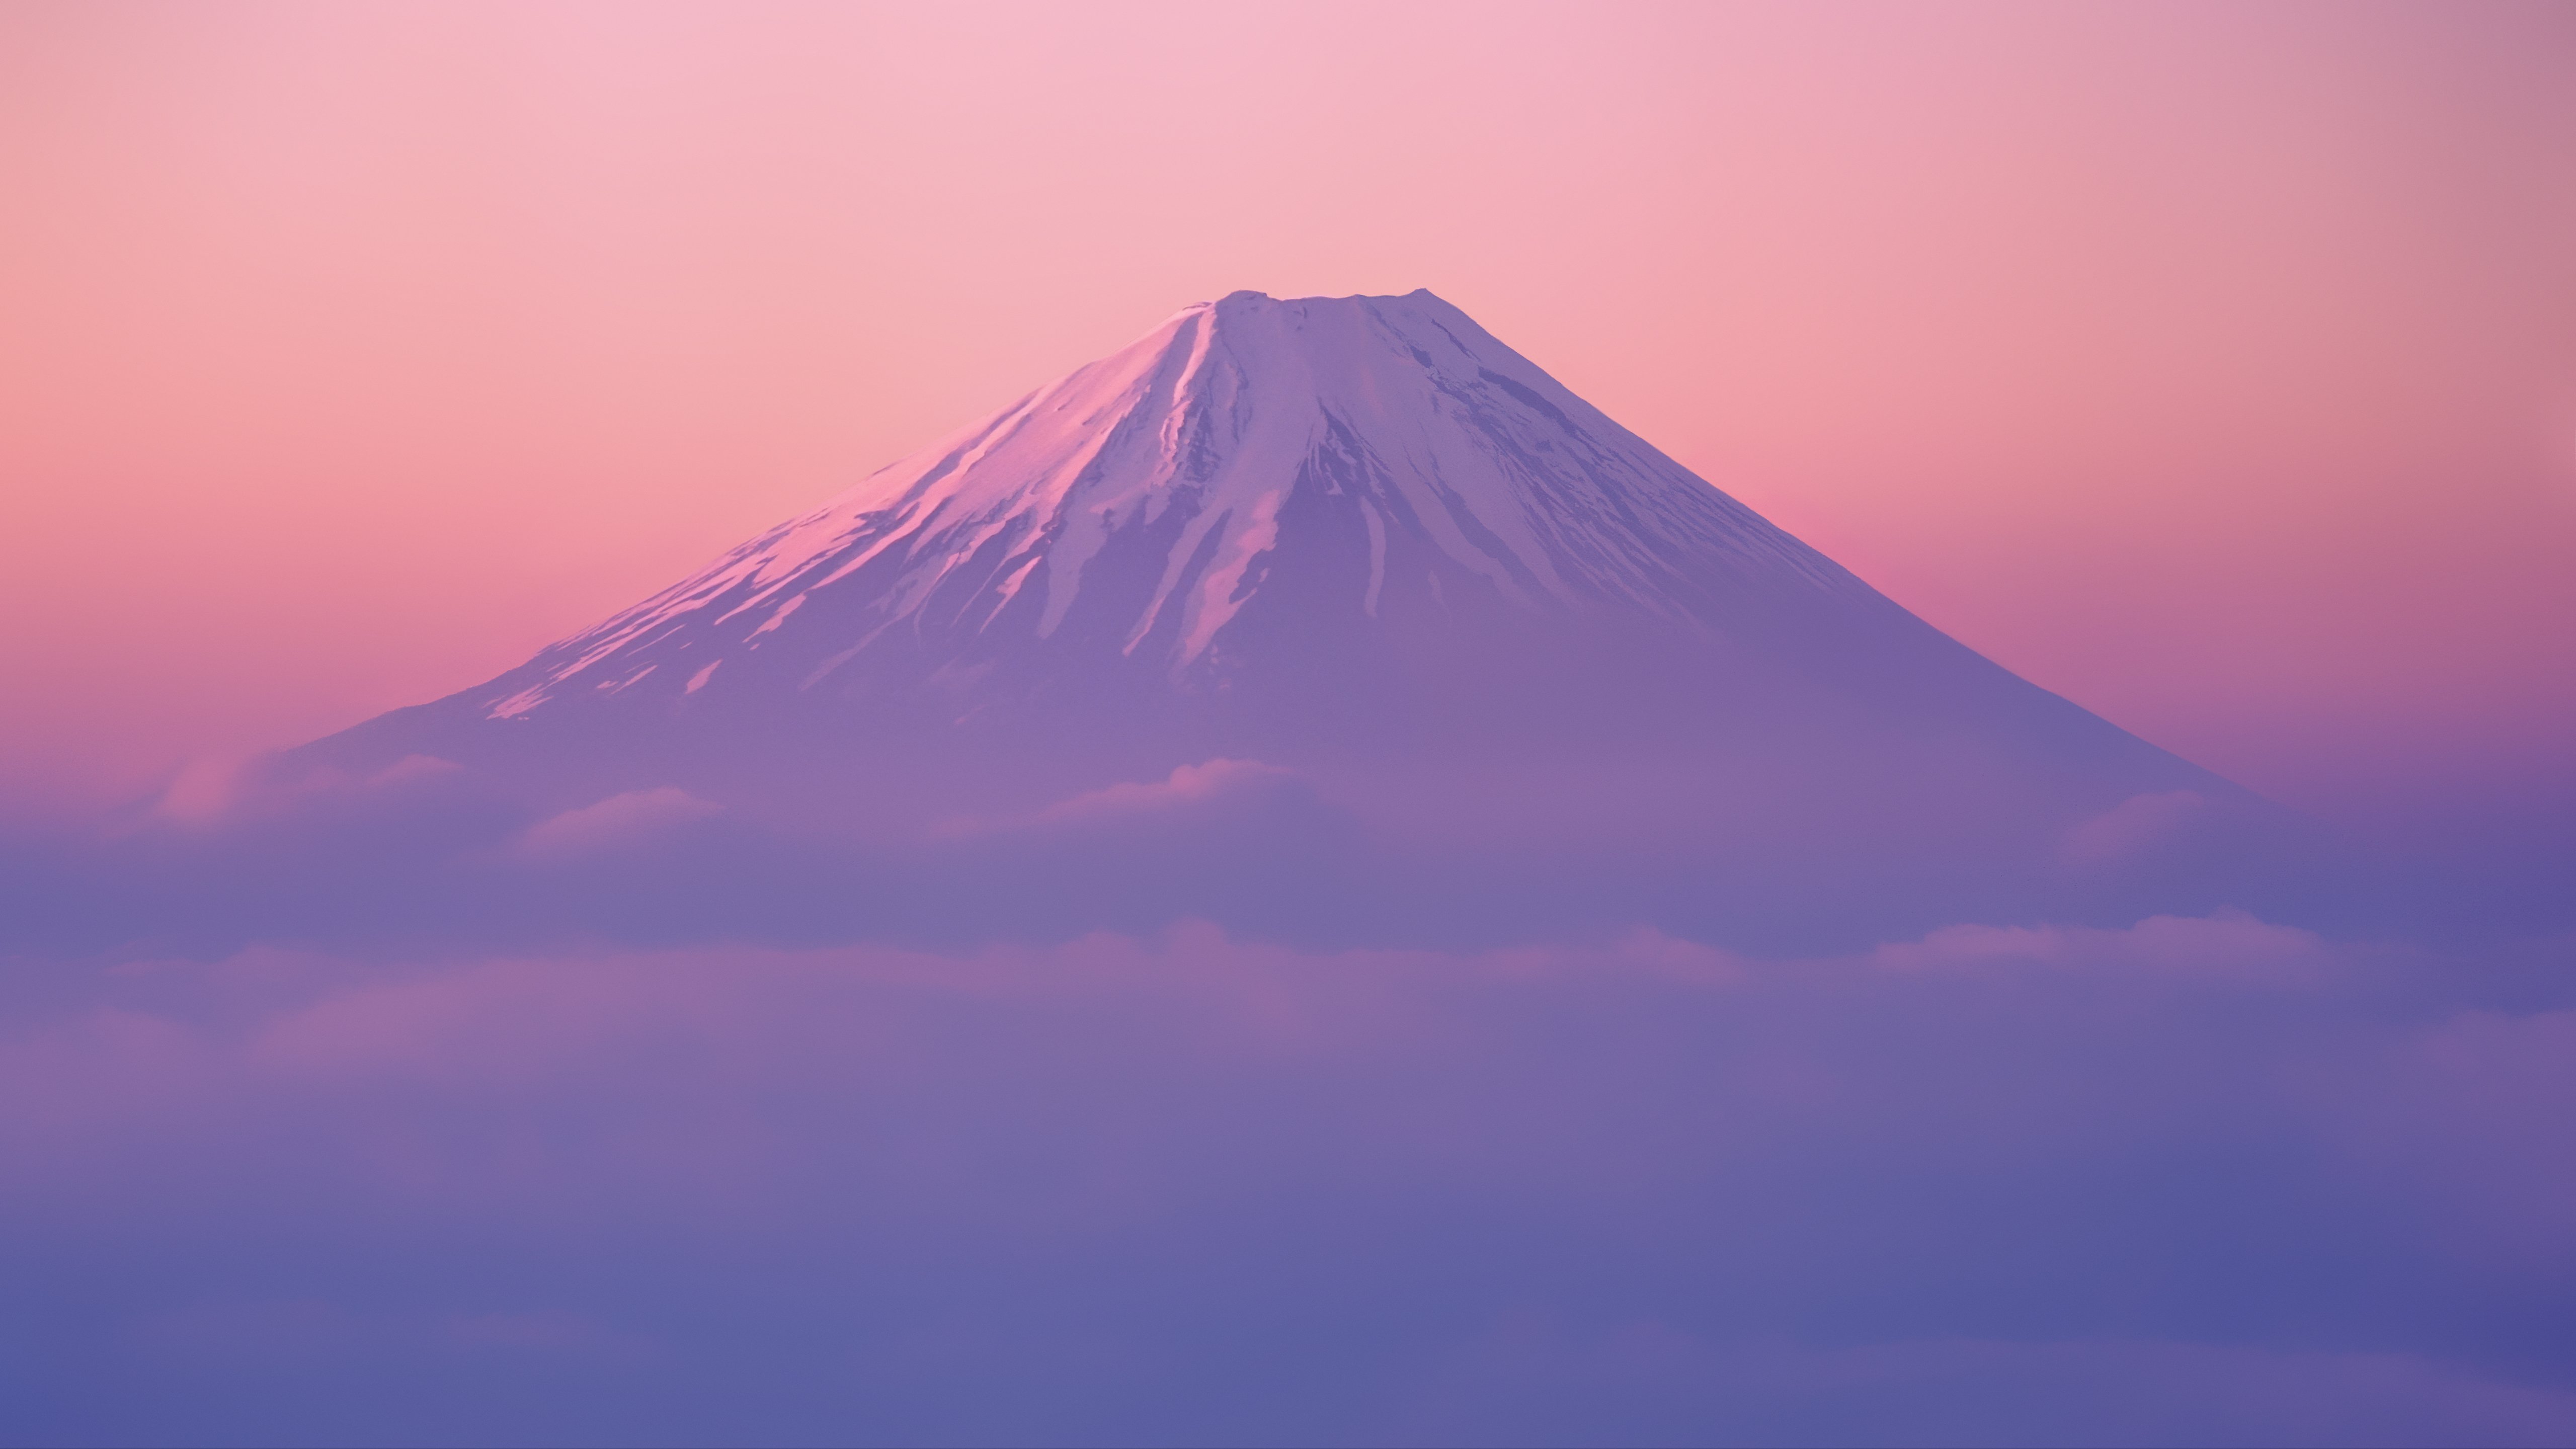 386502 Mount Fuji Autumn Maple Japan 4k - Rare Gallery HD Wallpapers